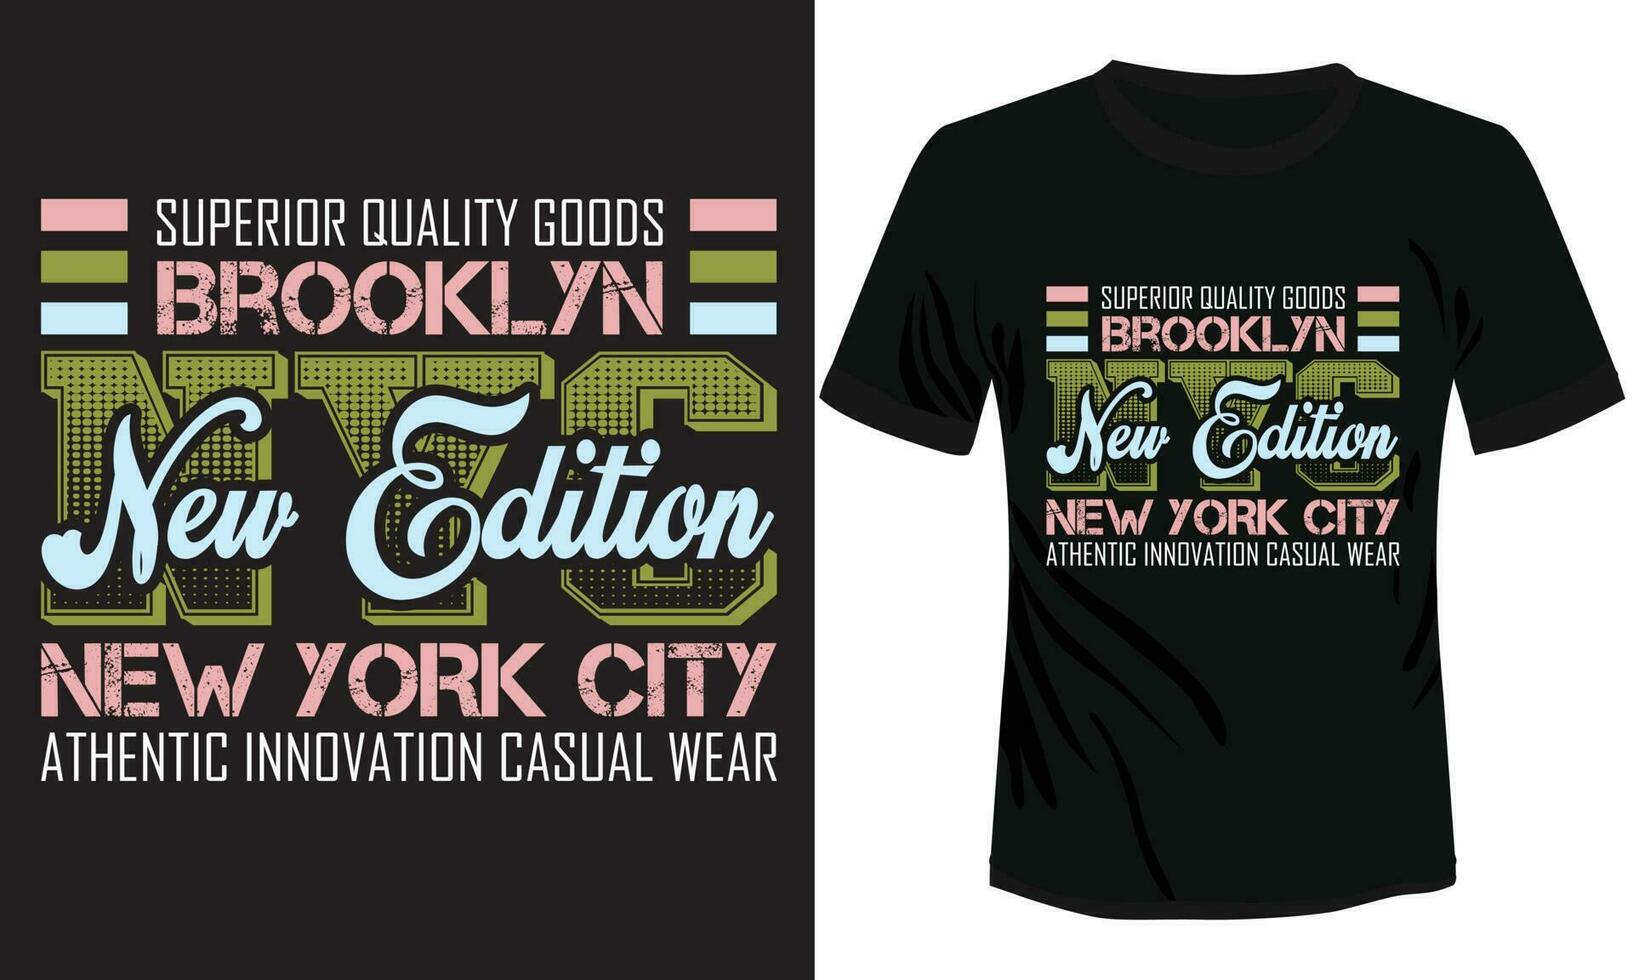 nyc Typografie T-Shirt Design Vektor Illustration